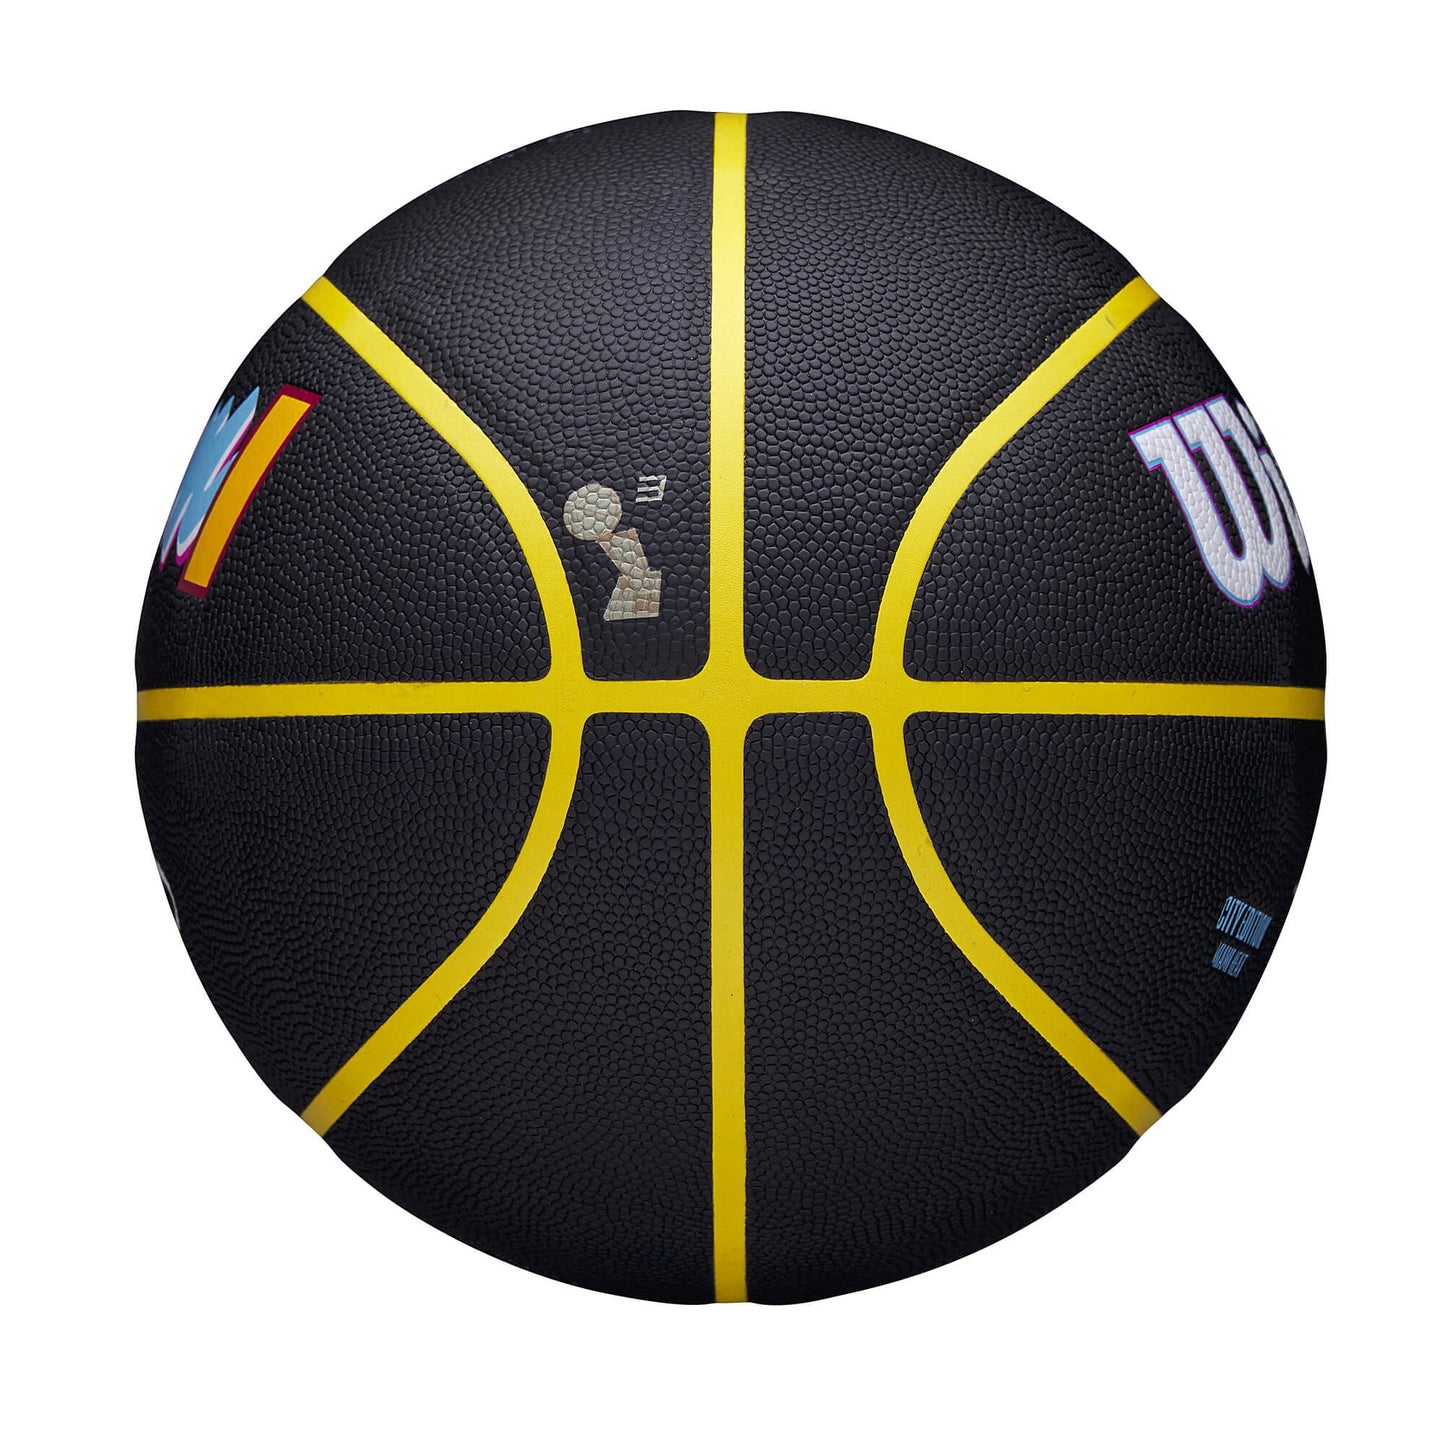 Wilson NBA Team City Collector Basketball Miami Heat - Black (sz. 7)